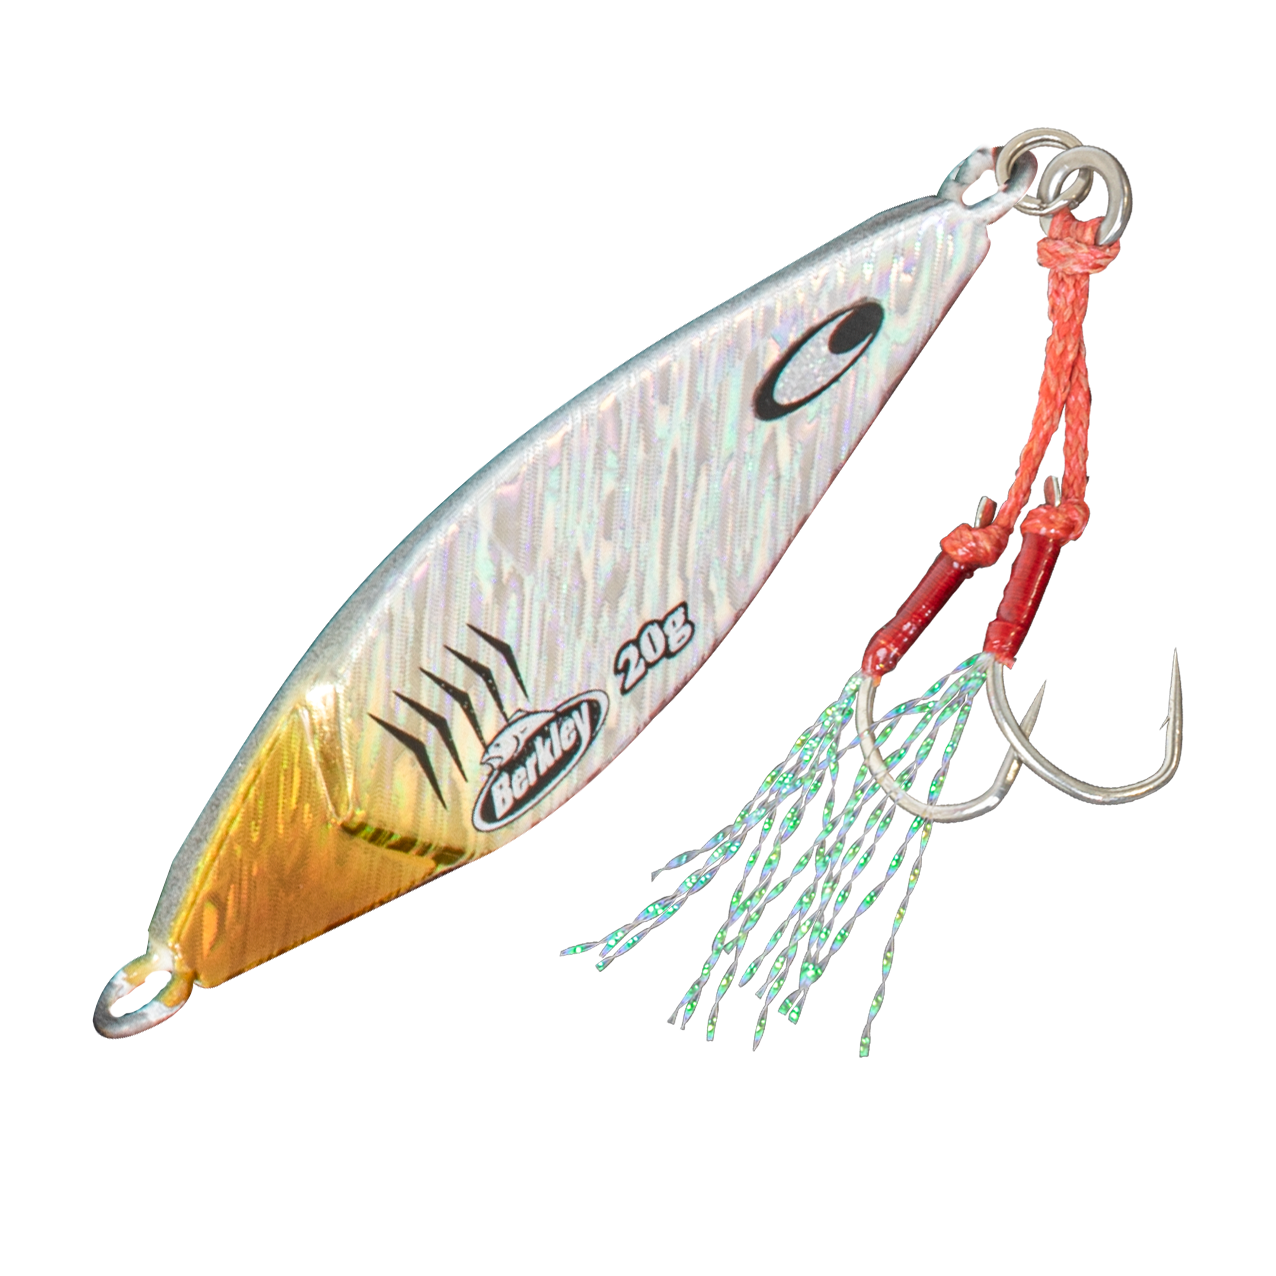 Berkley Skid Jig Fishing Lure 40g Metal Jig - Choose Colour BRAND NEW @   Fis